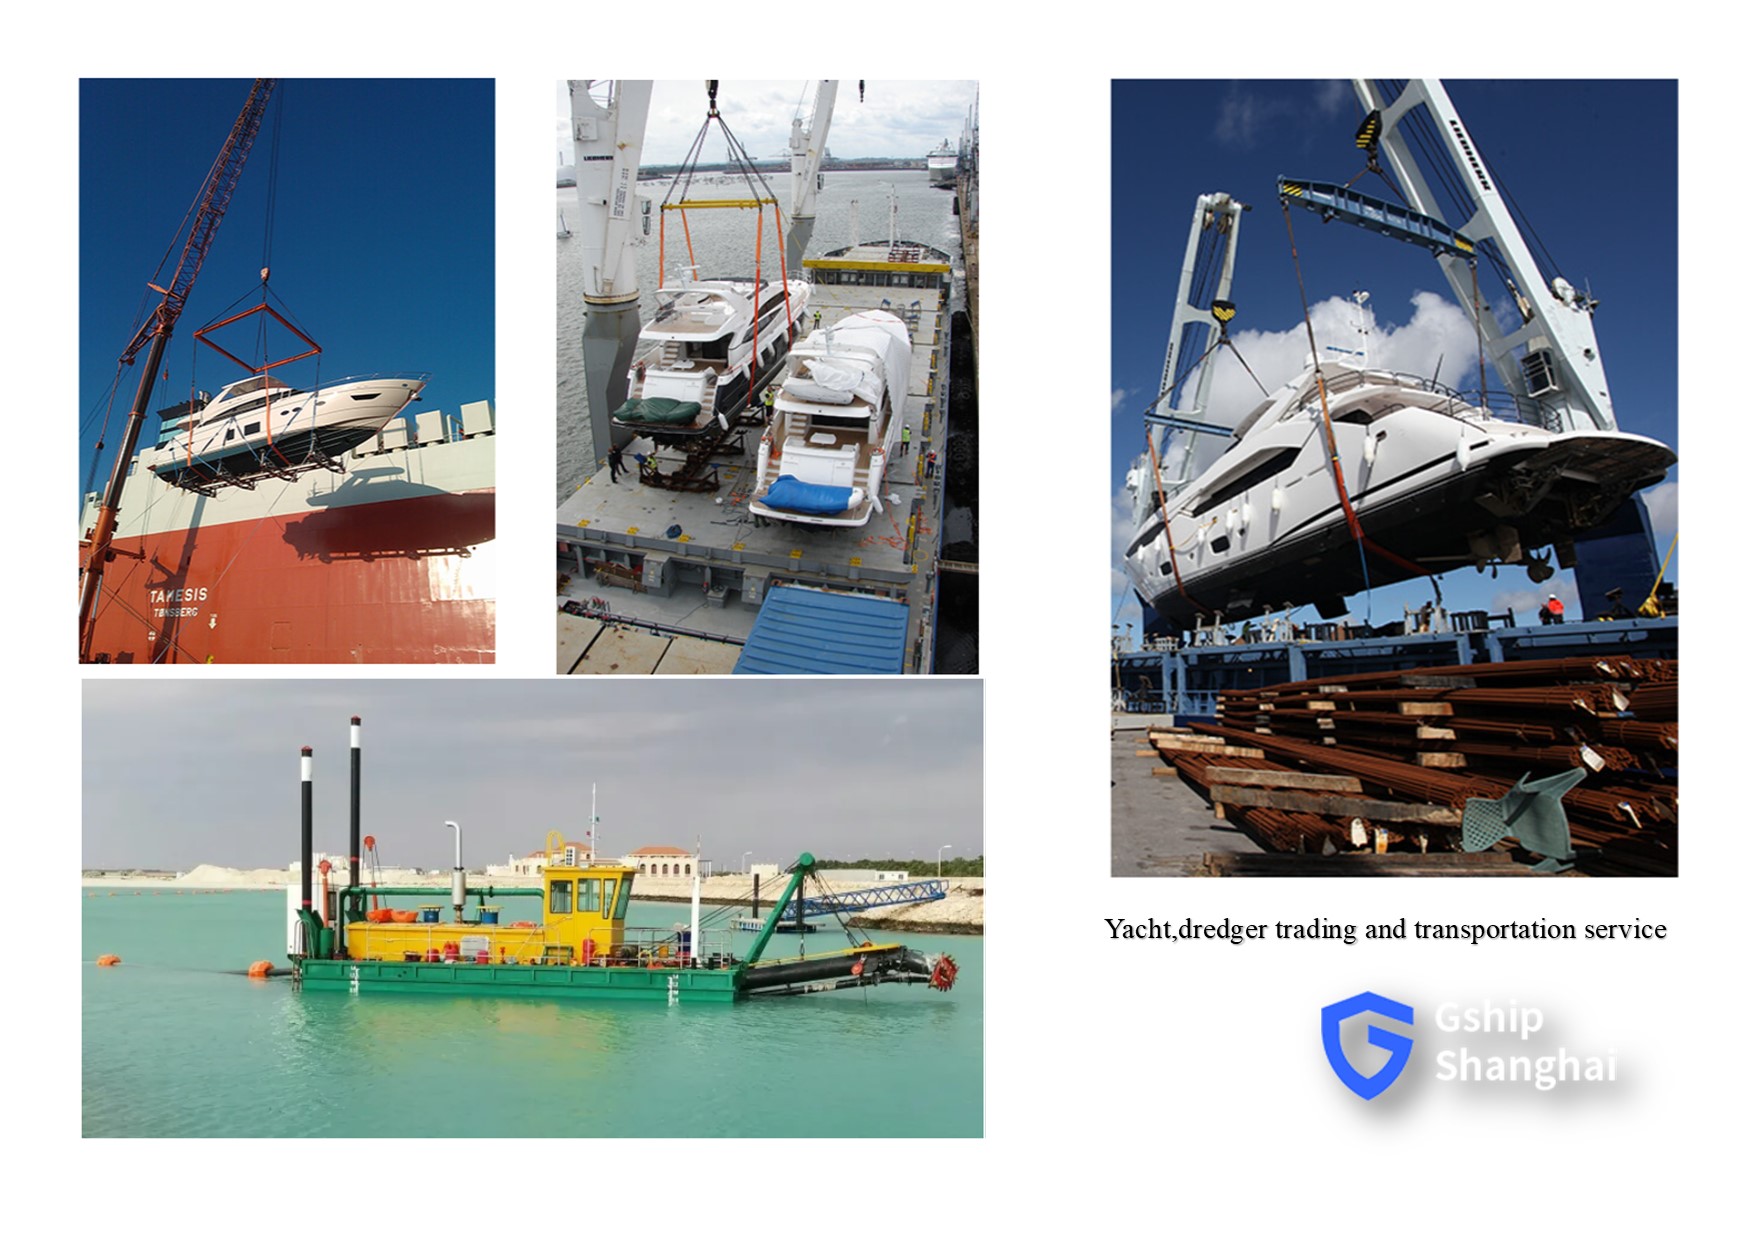 Yacht,dredger trading and transportation service.jpg